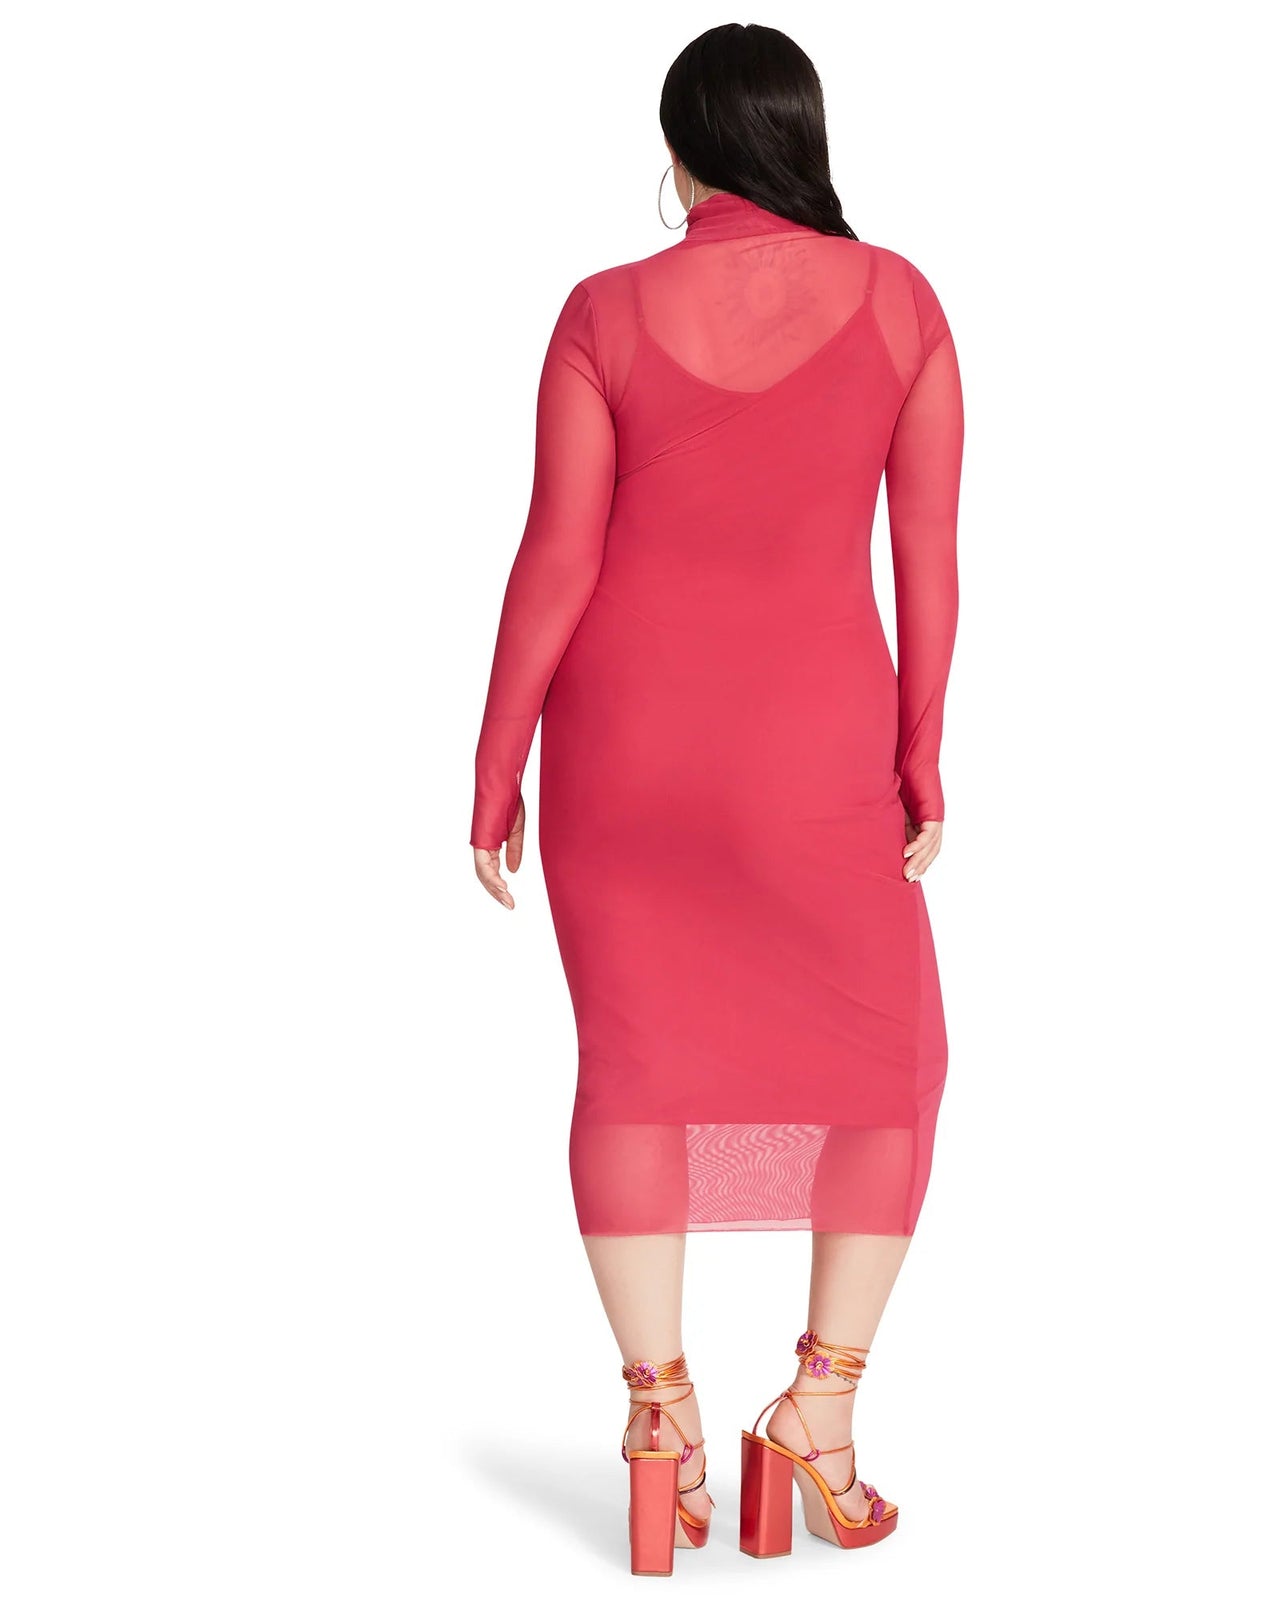 Vivienne Dress Hot Pink, Dress by Steve Madden | LIT Boutique